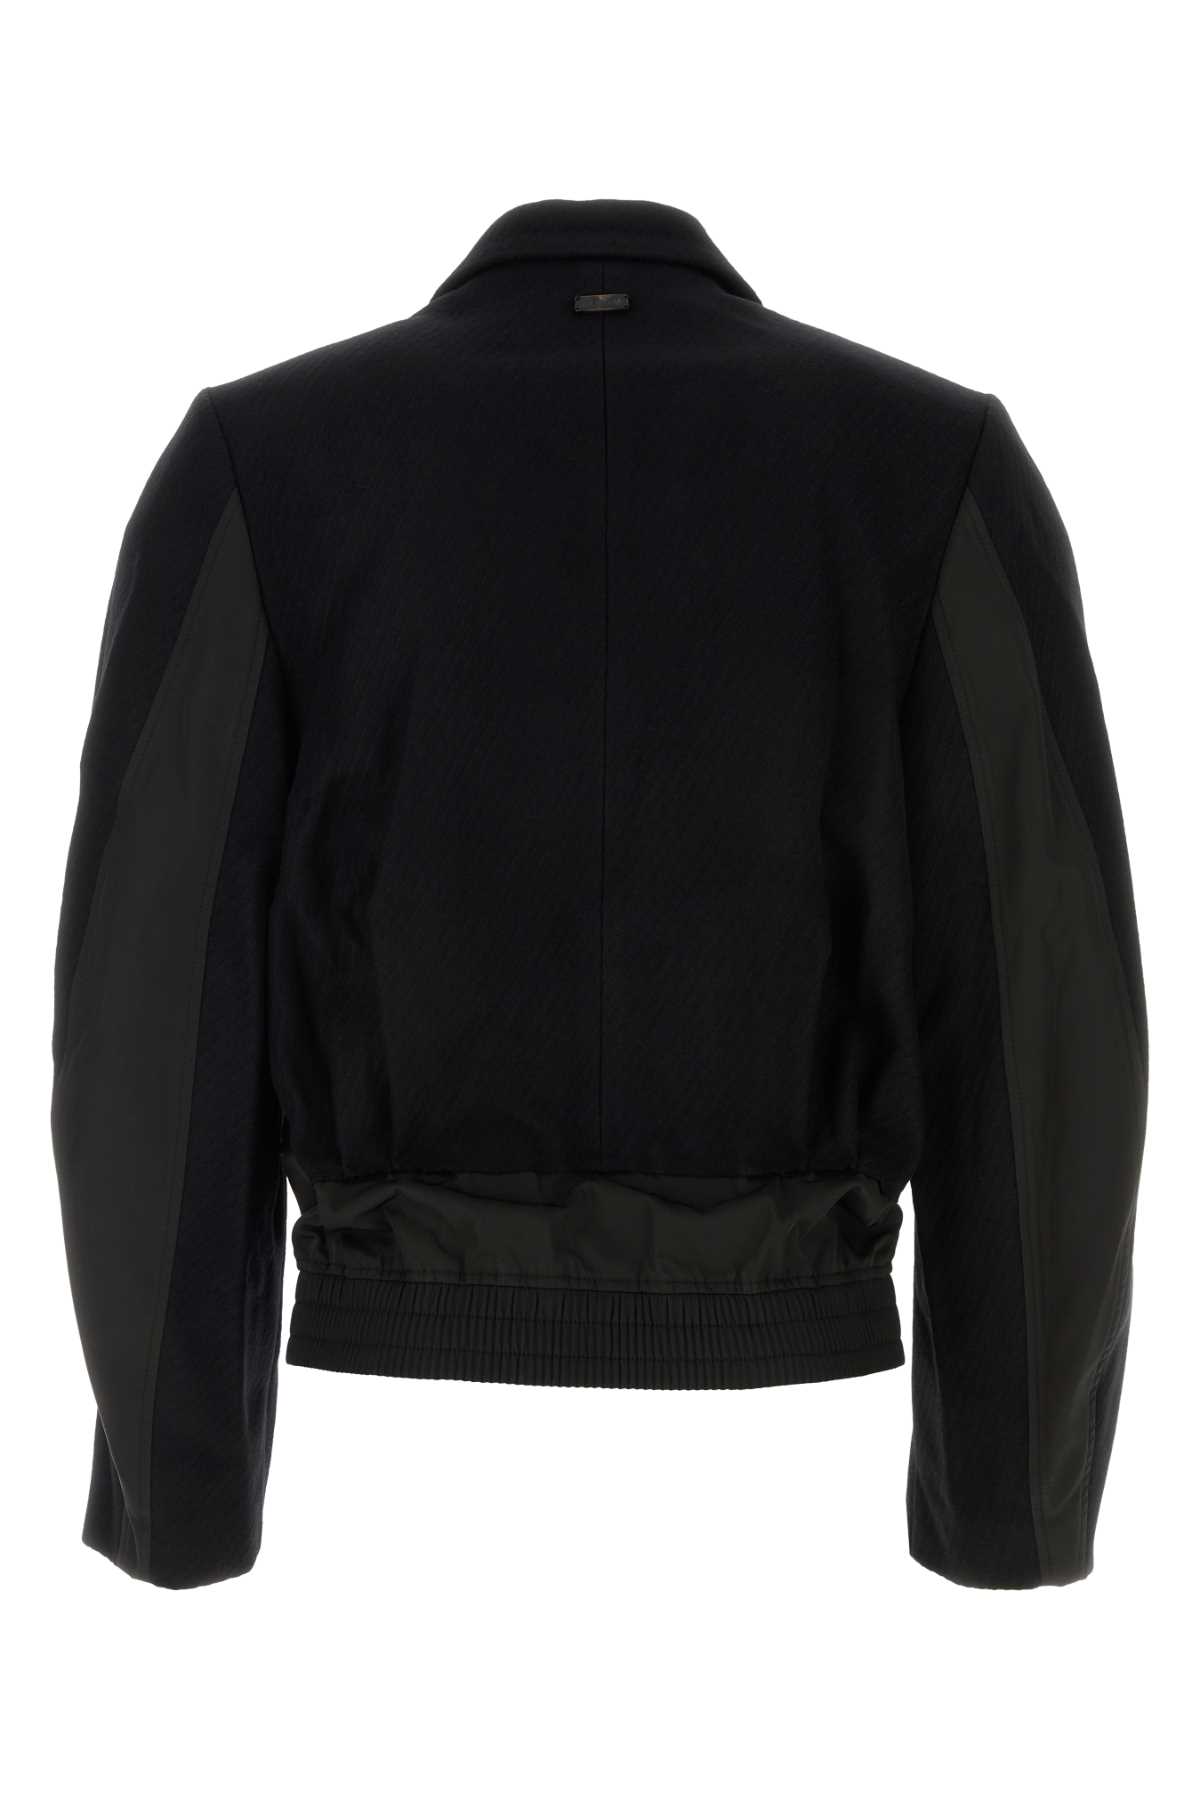 Ader Error Black Wool Blend Jacket In Noir